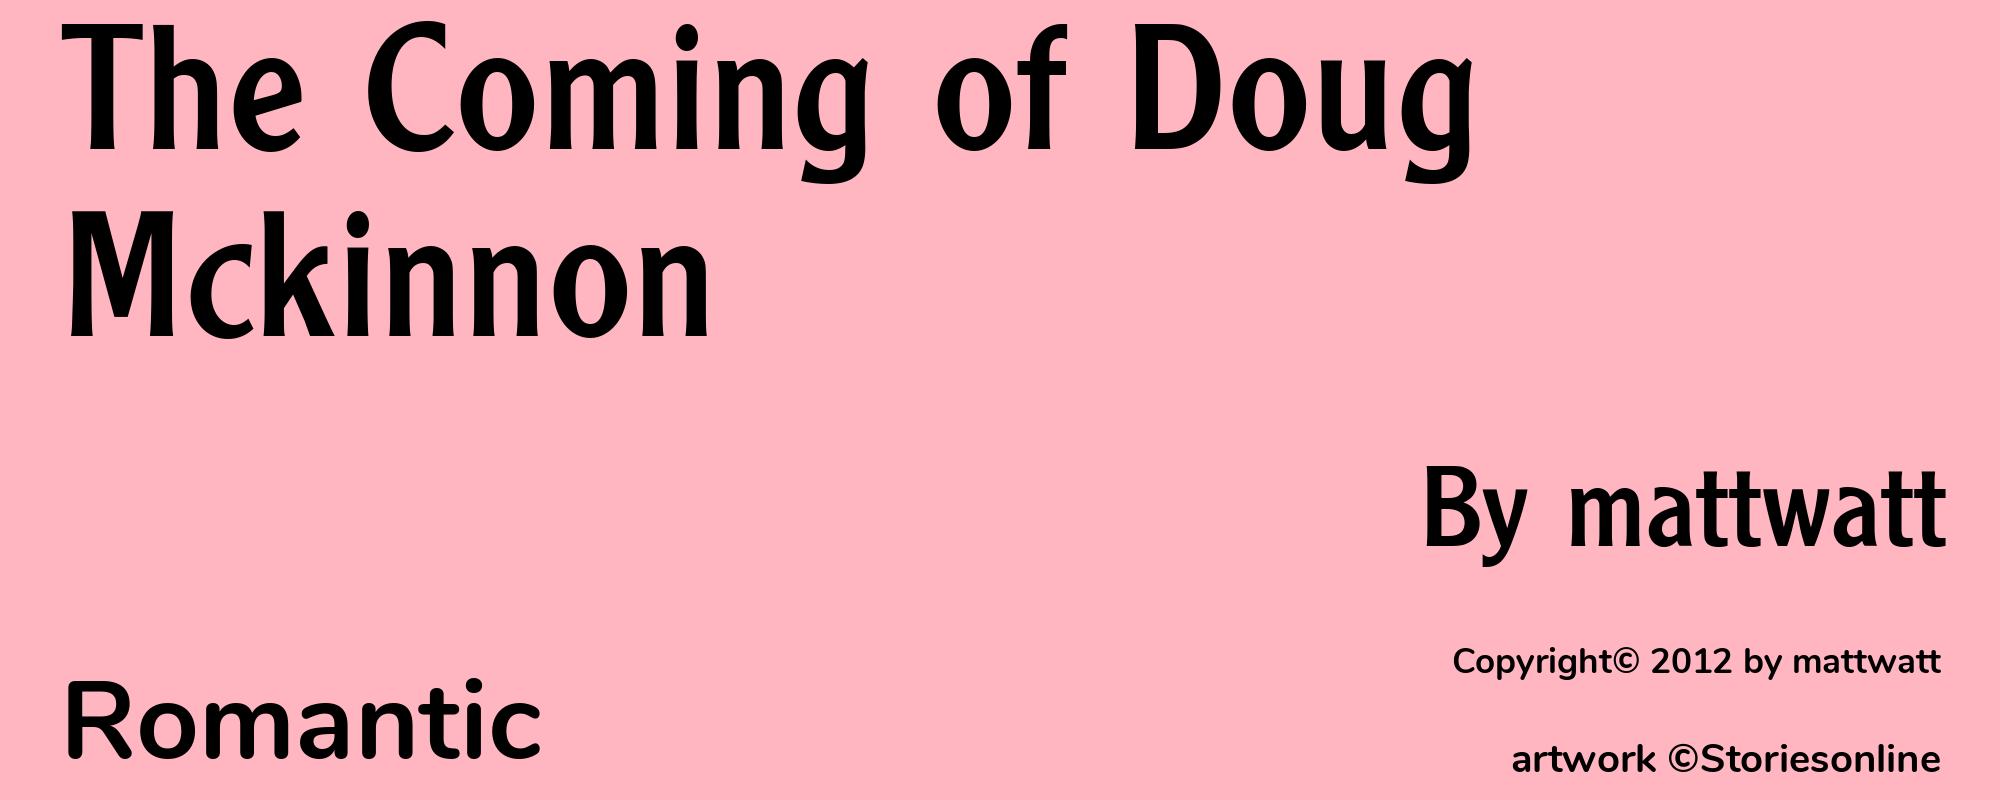 The Coming of Doug Mckinnon - Cover